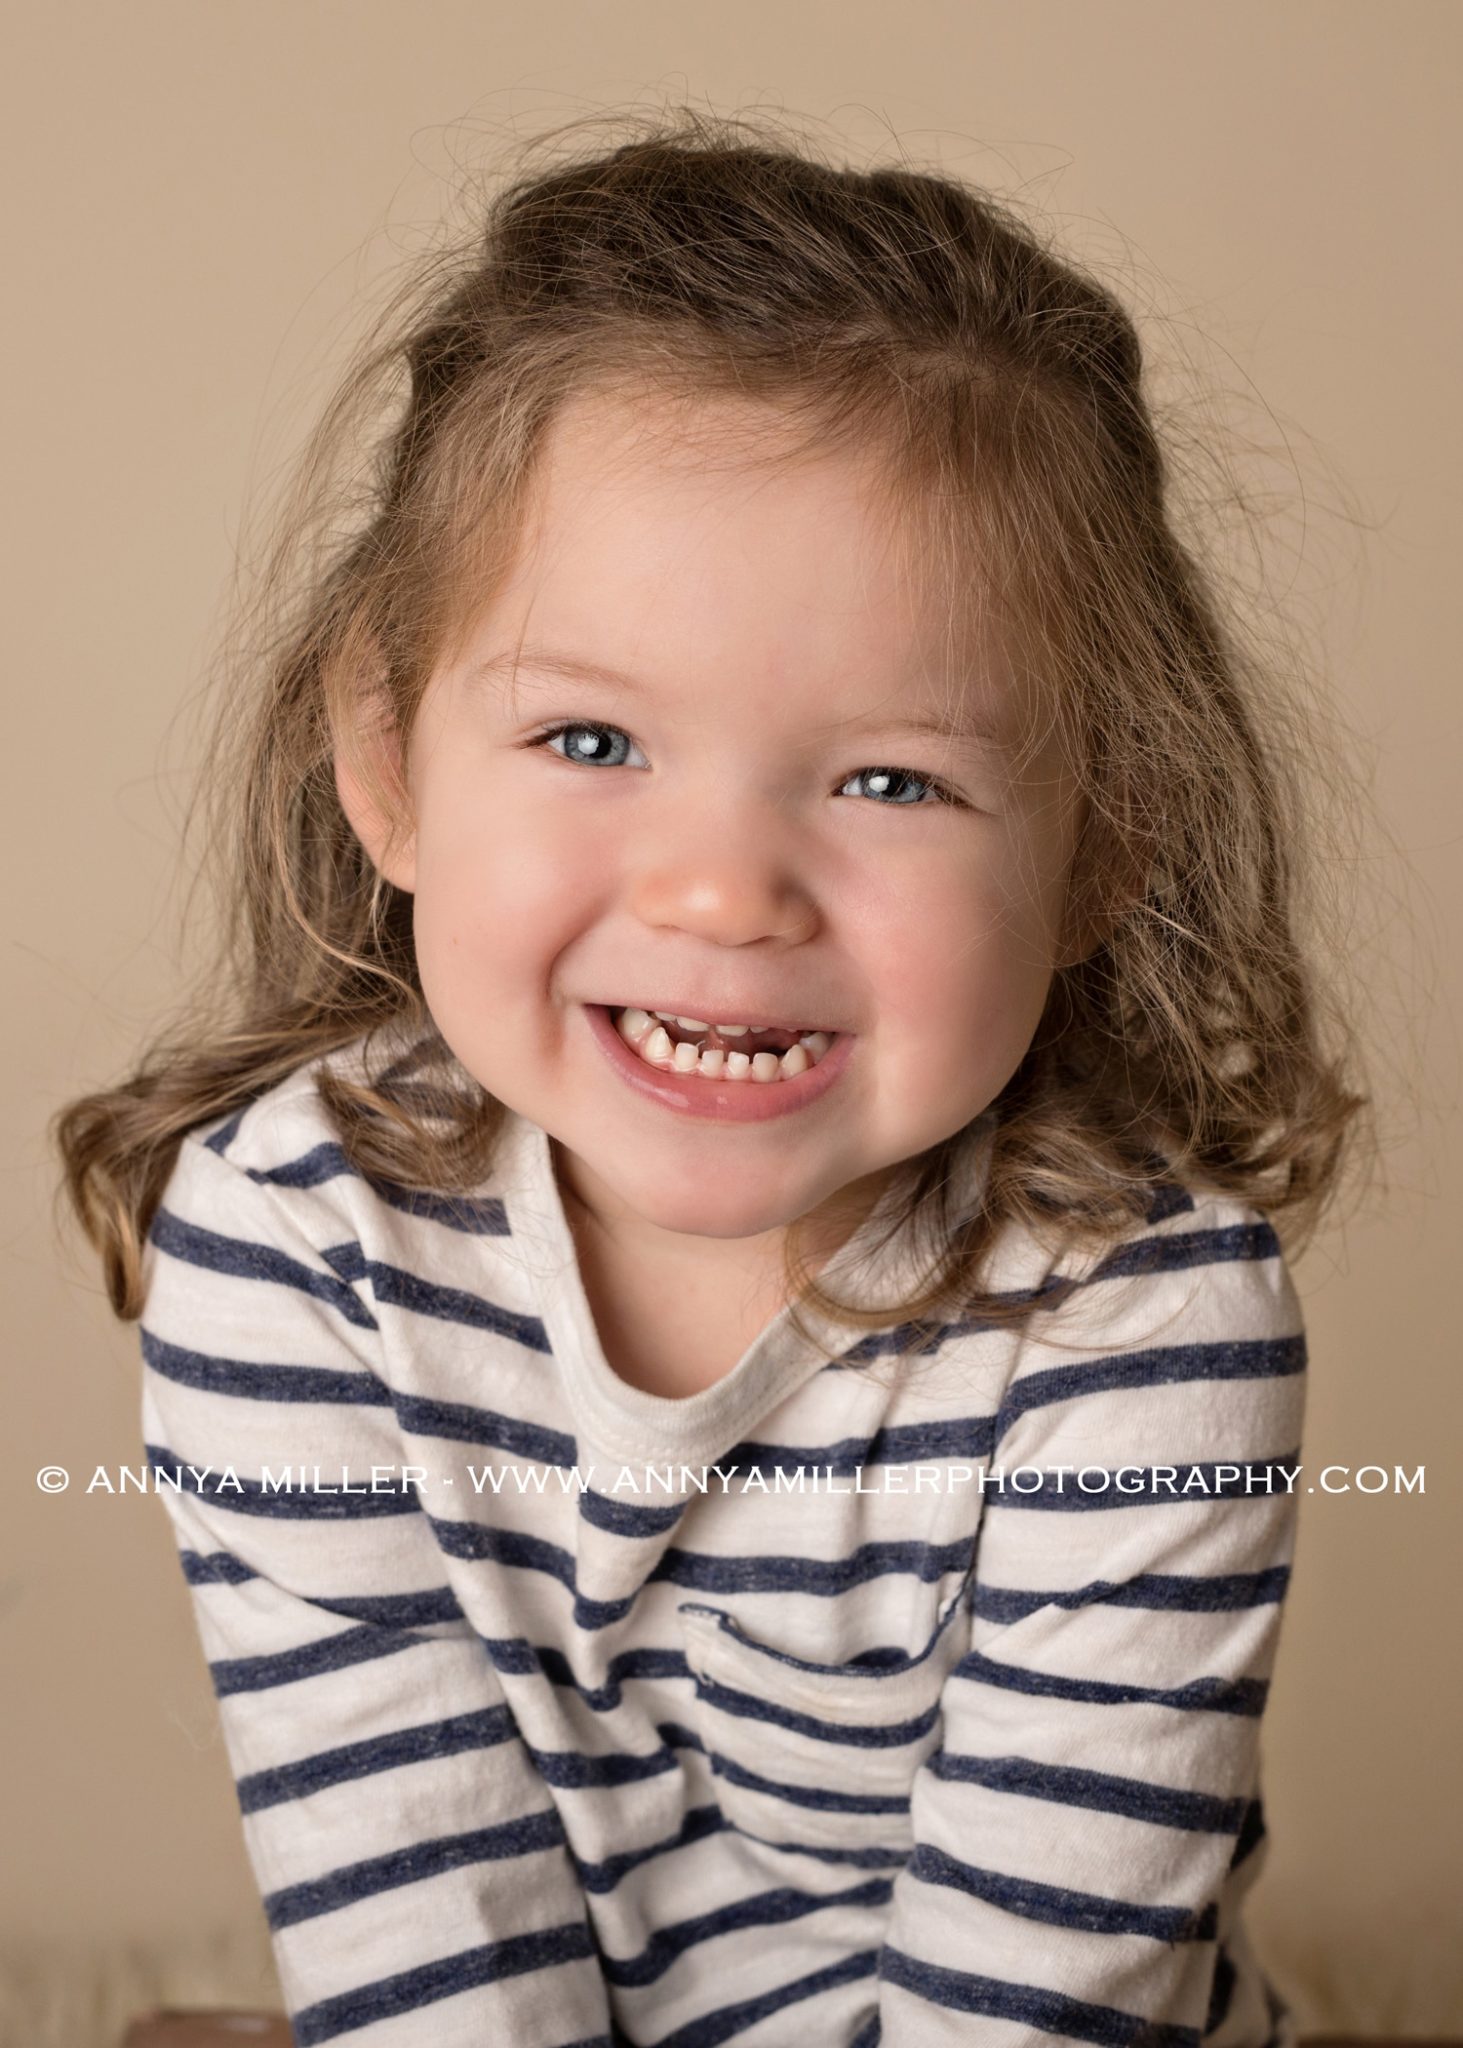 Portraits by Durham region toddler photographer Annya Miller of Pickering